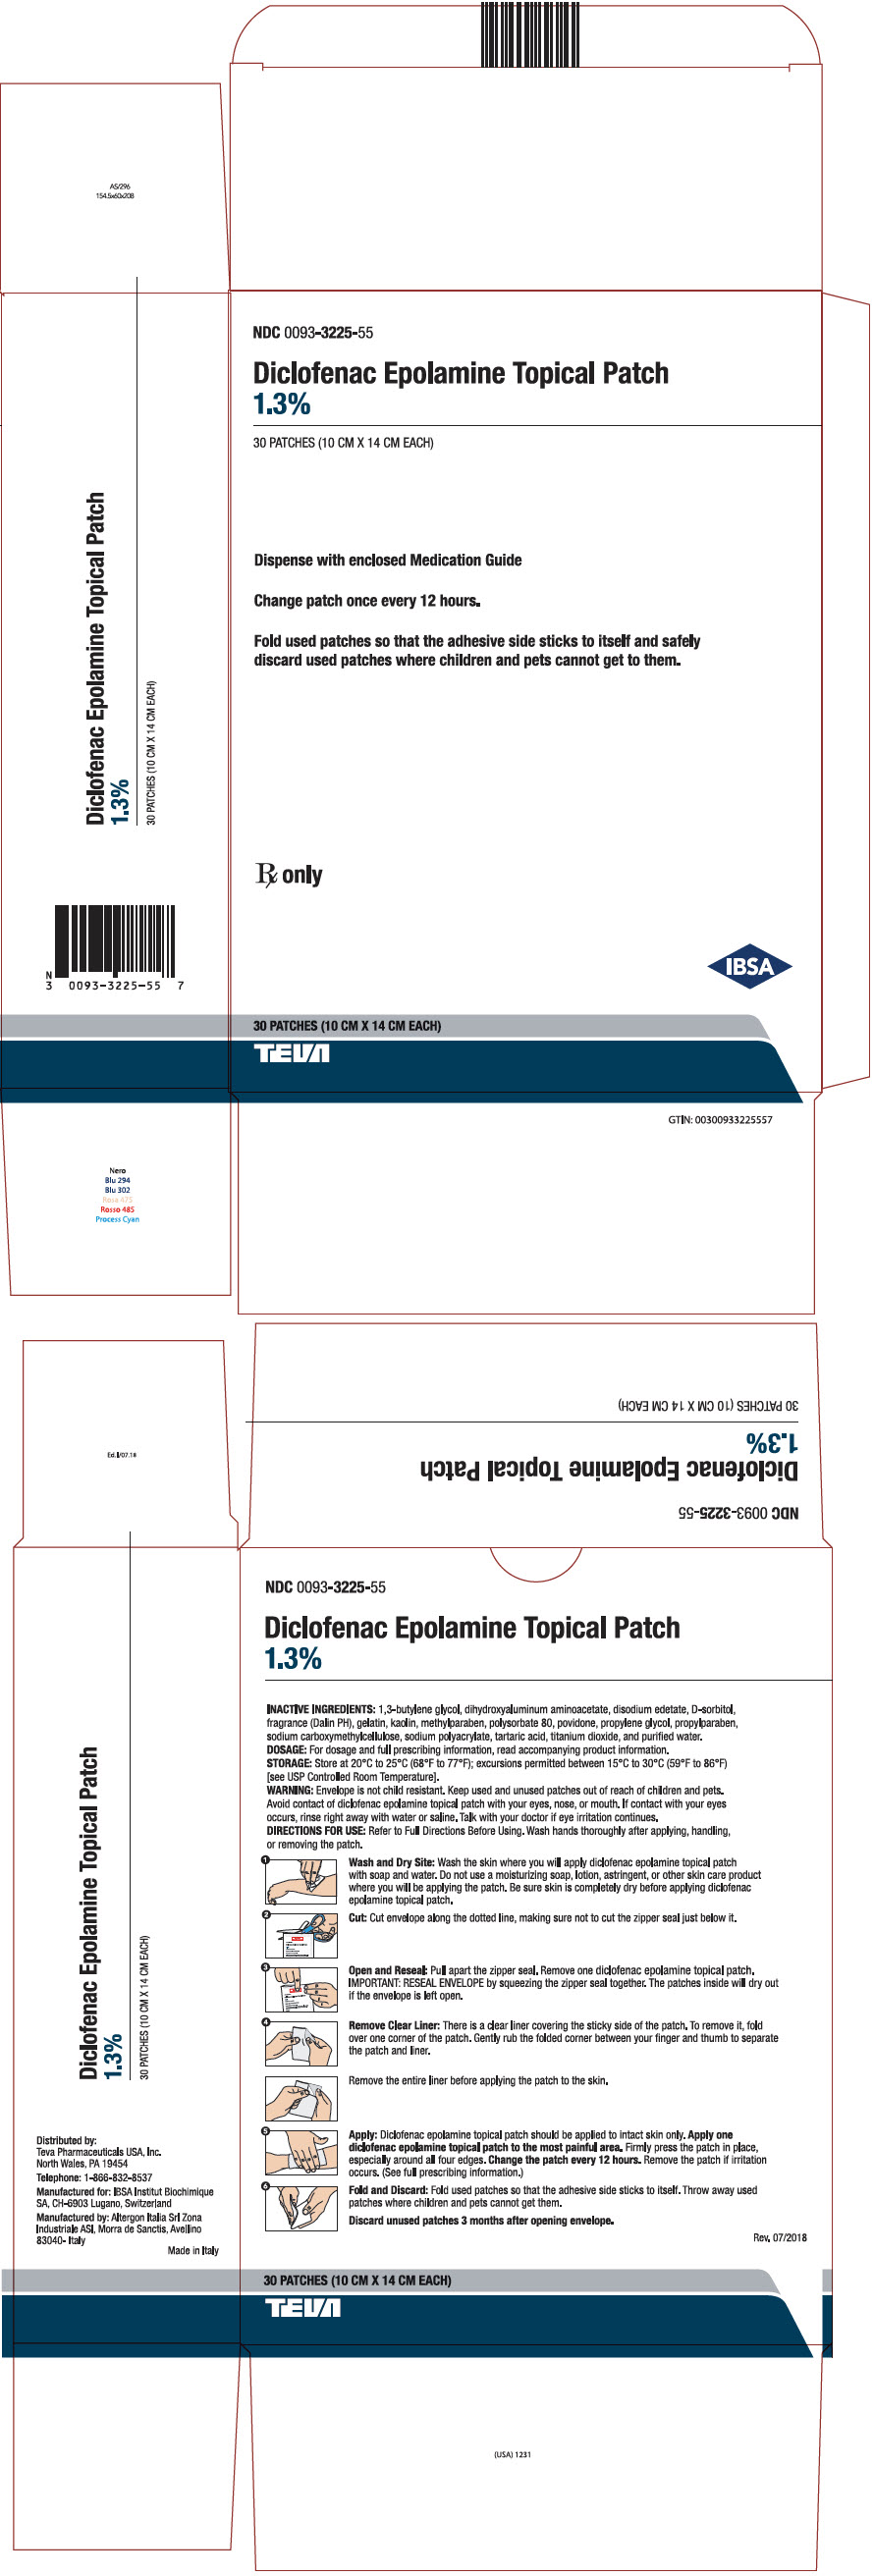 PRINCIPAL DISPLAY PANEL - 30 Patch Pouch Carton